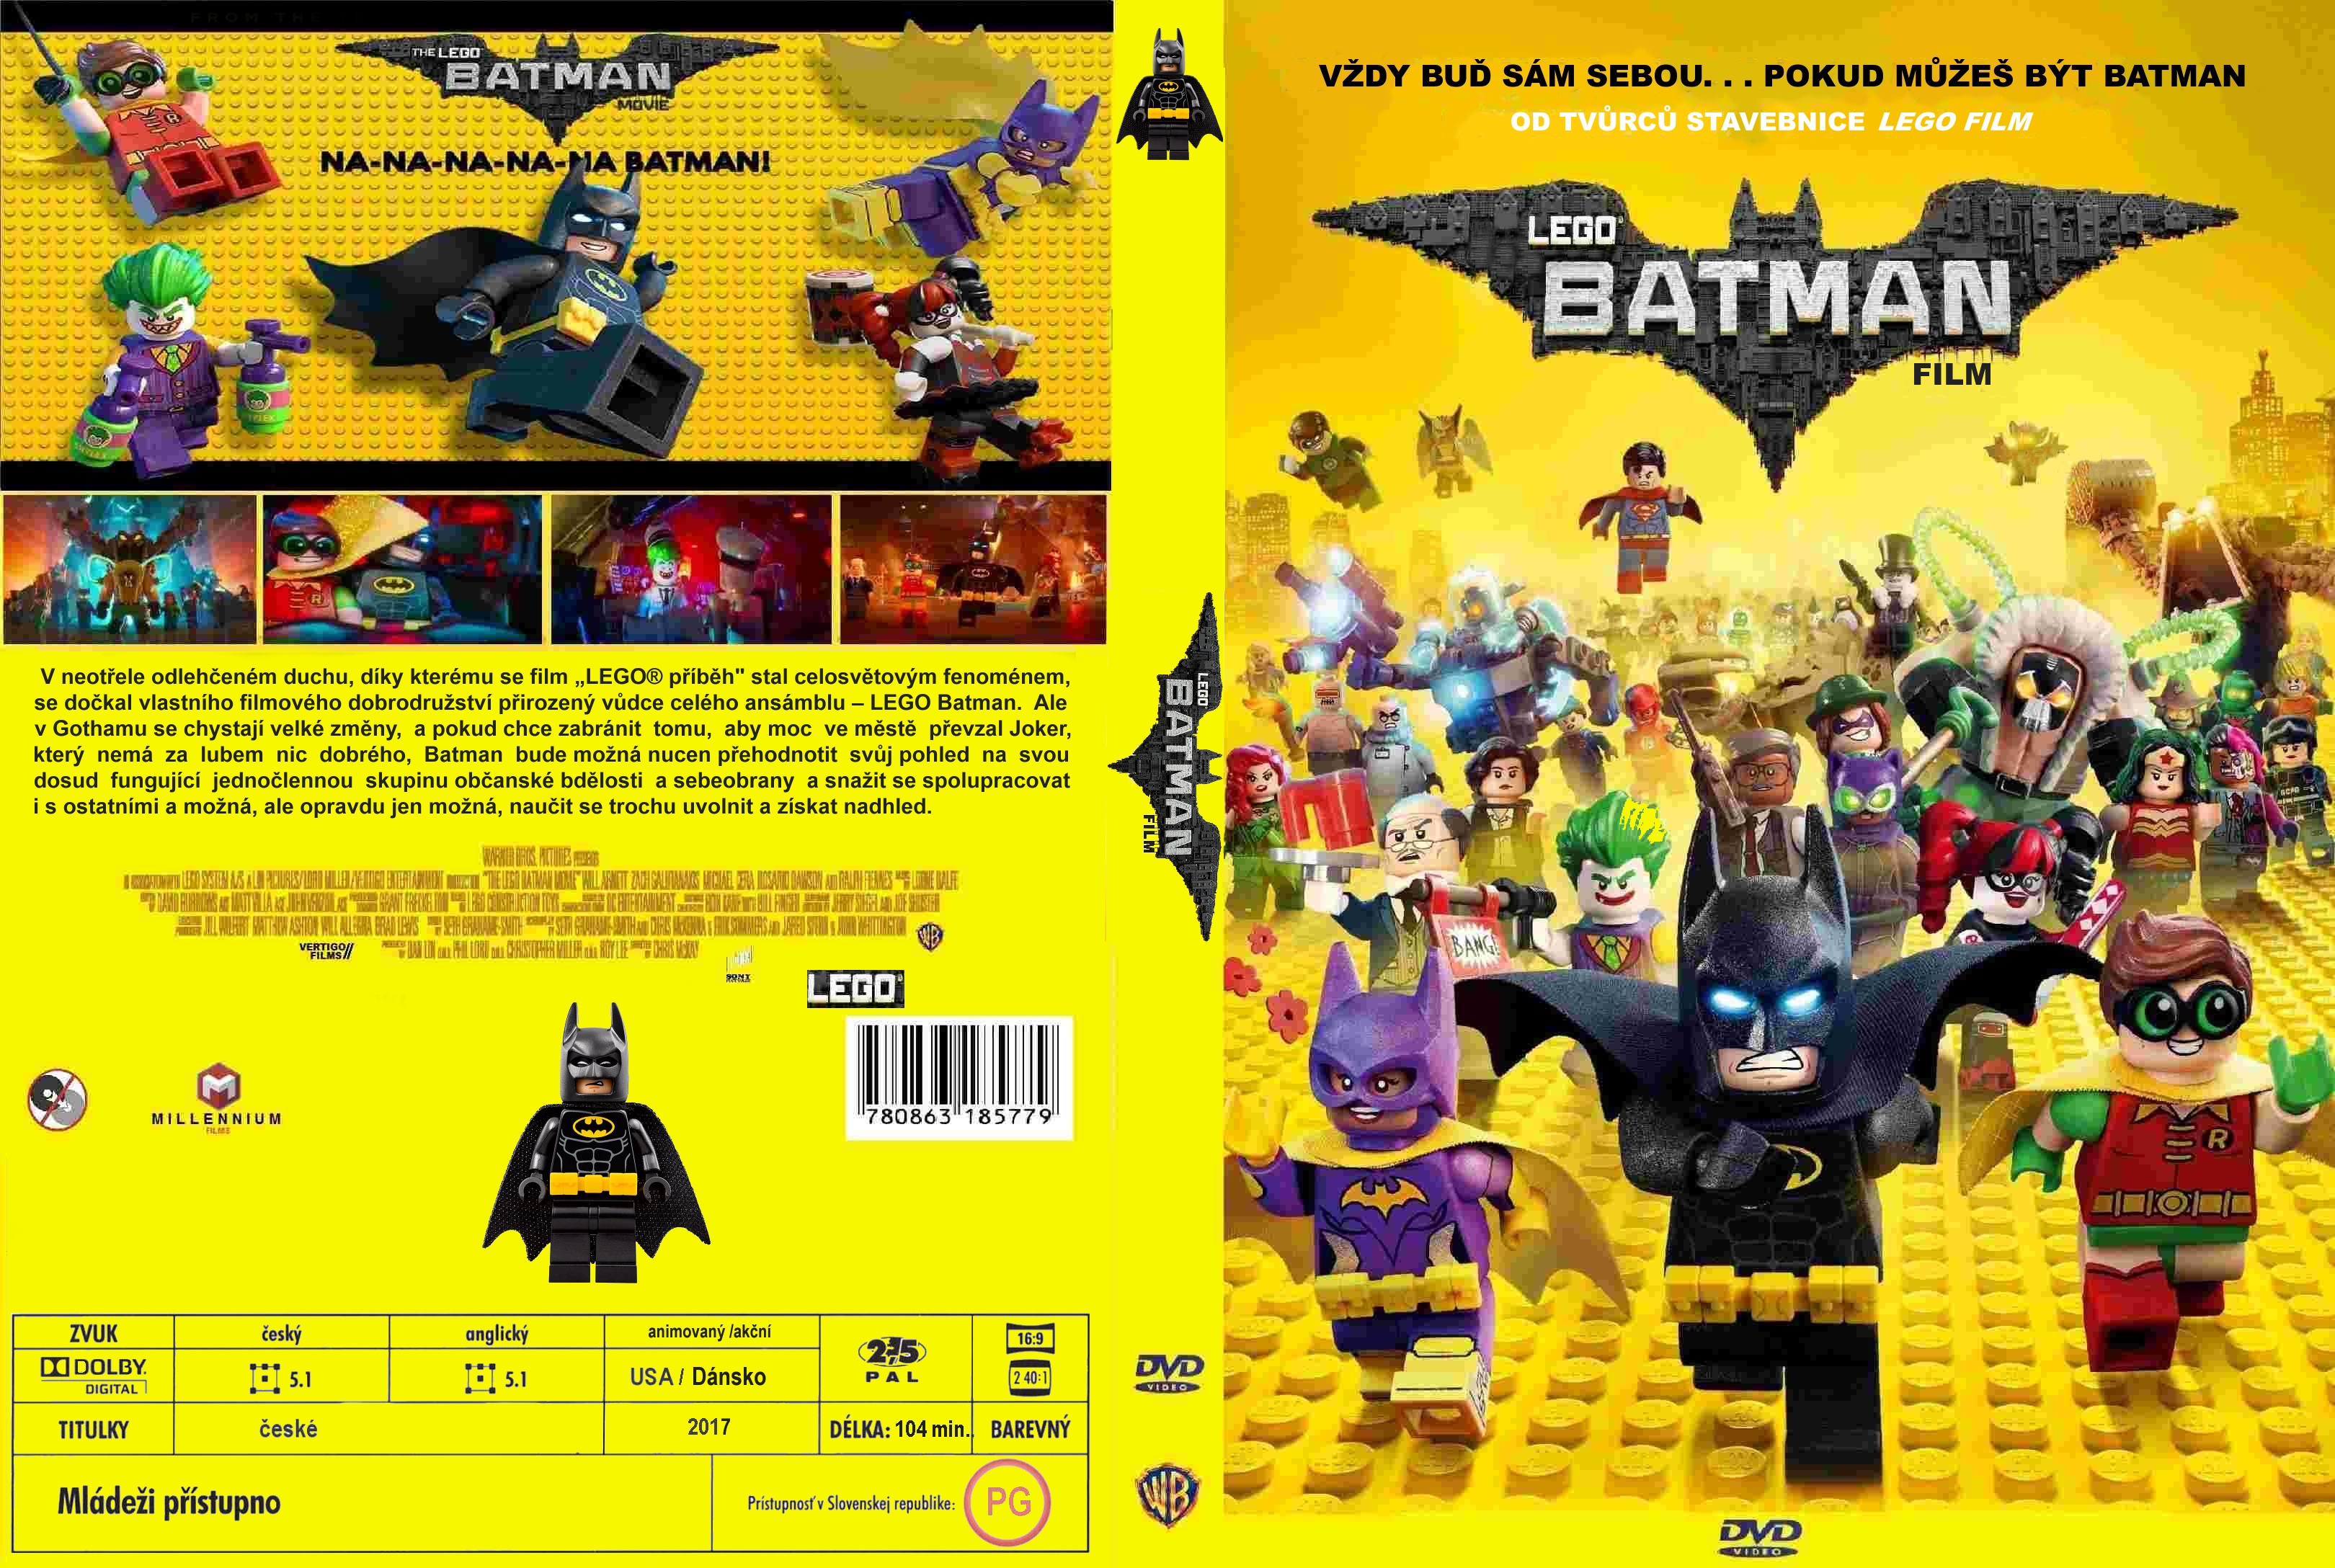  ::: The Lego Batman Movie (2017) - high quality DVD / Blueray  / Movie